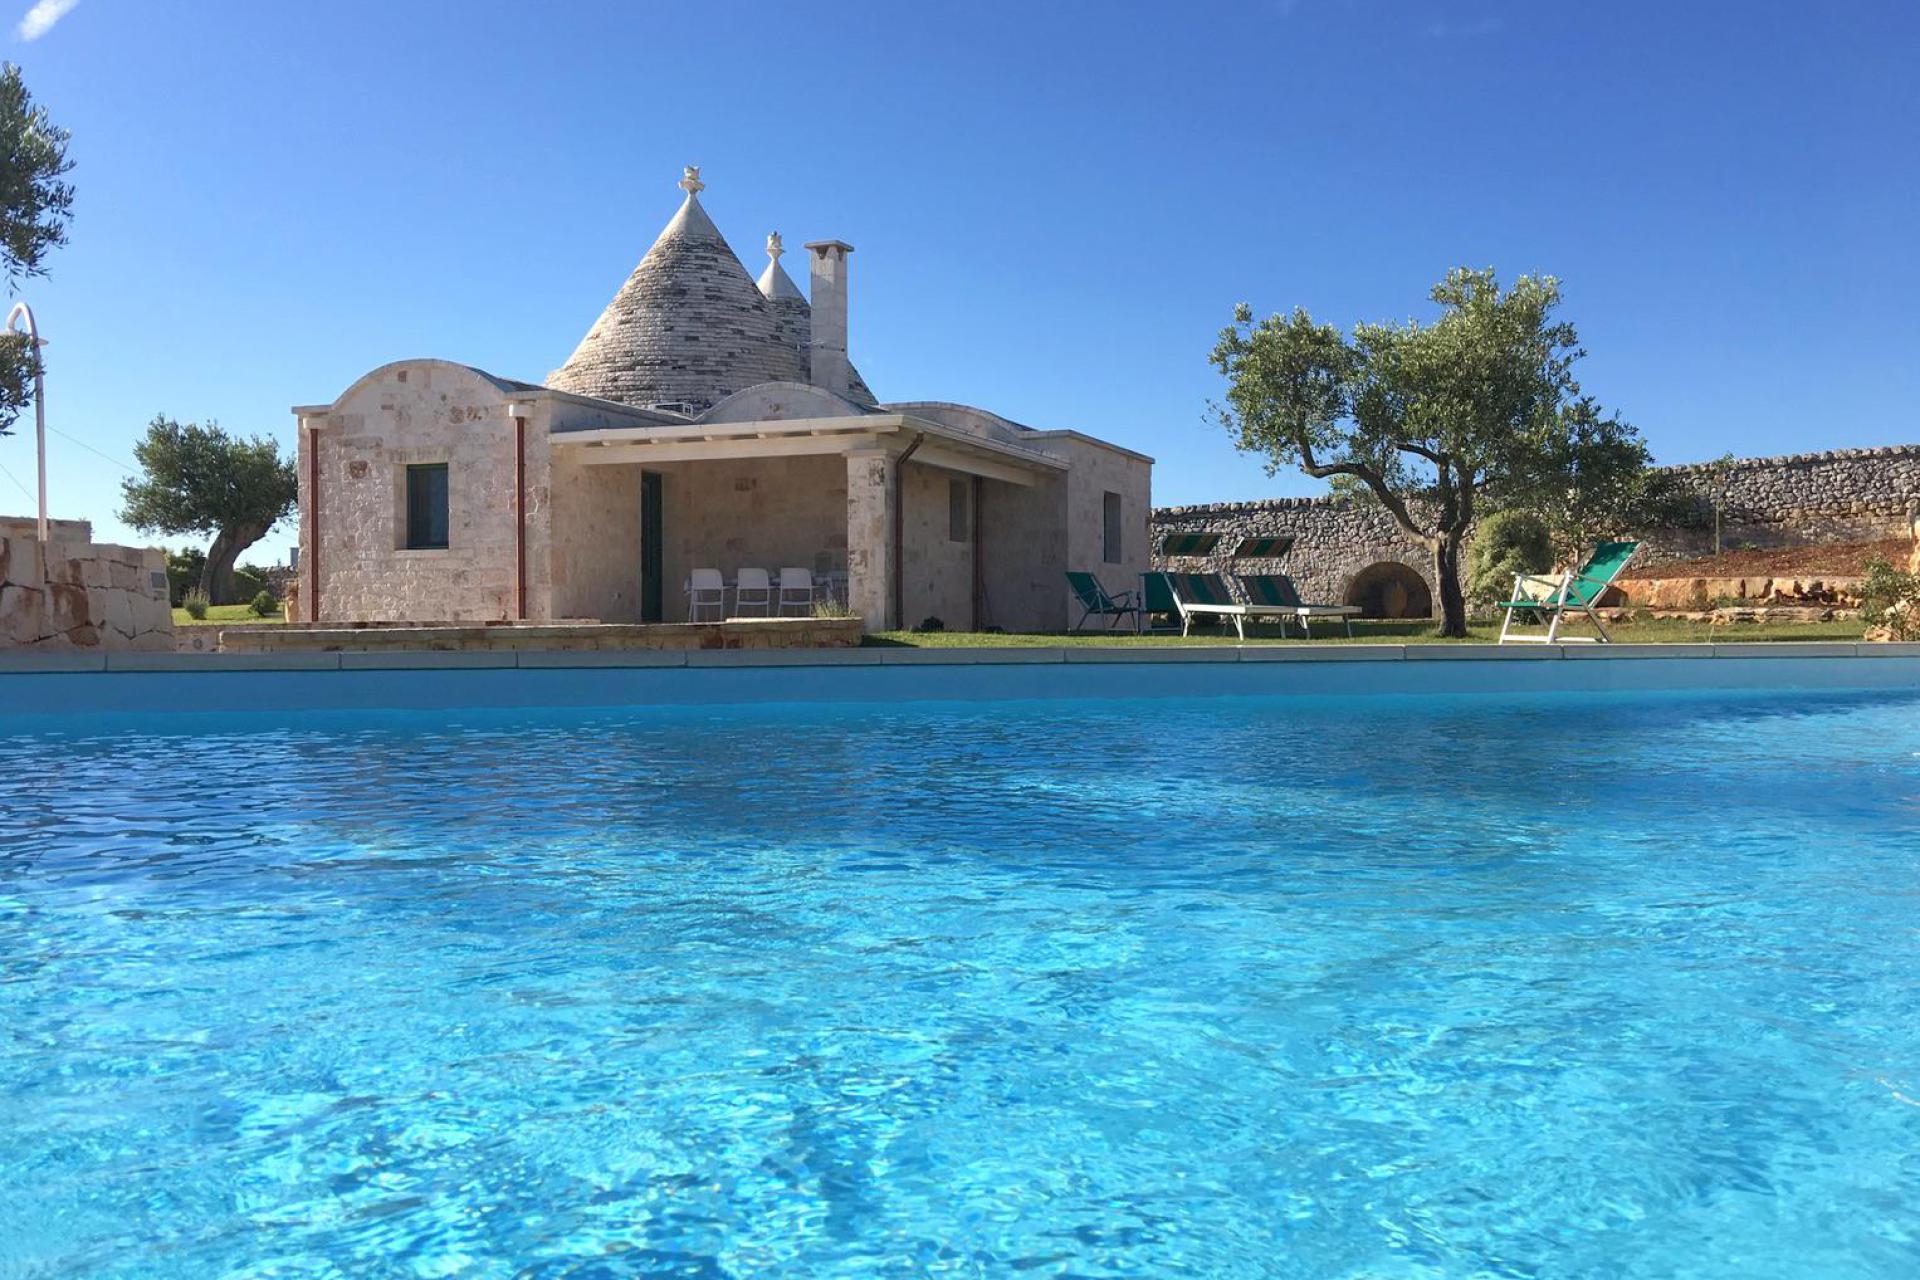 Agriturismo Puglia Prachtige verbouwde trullo met privé zwembad